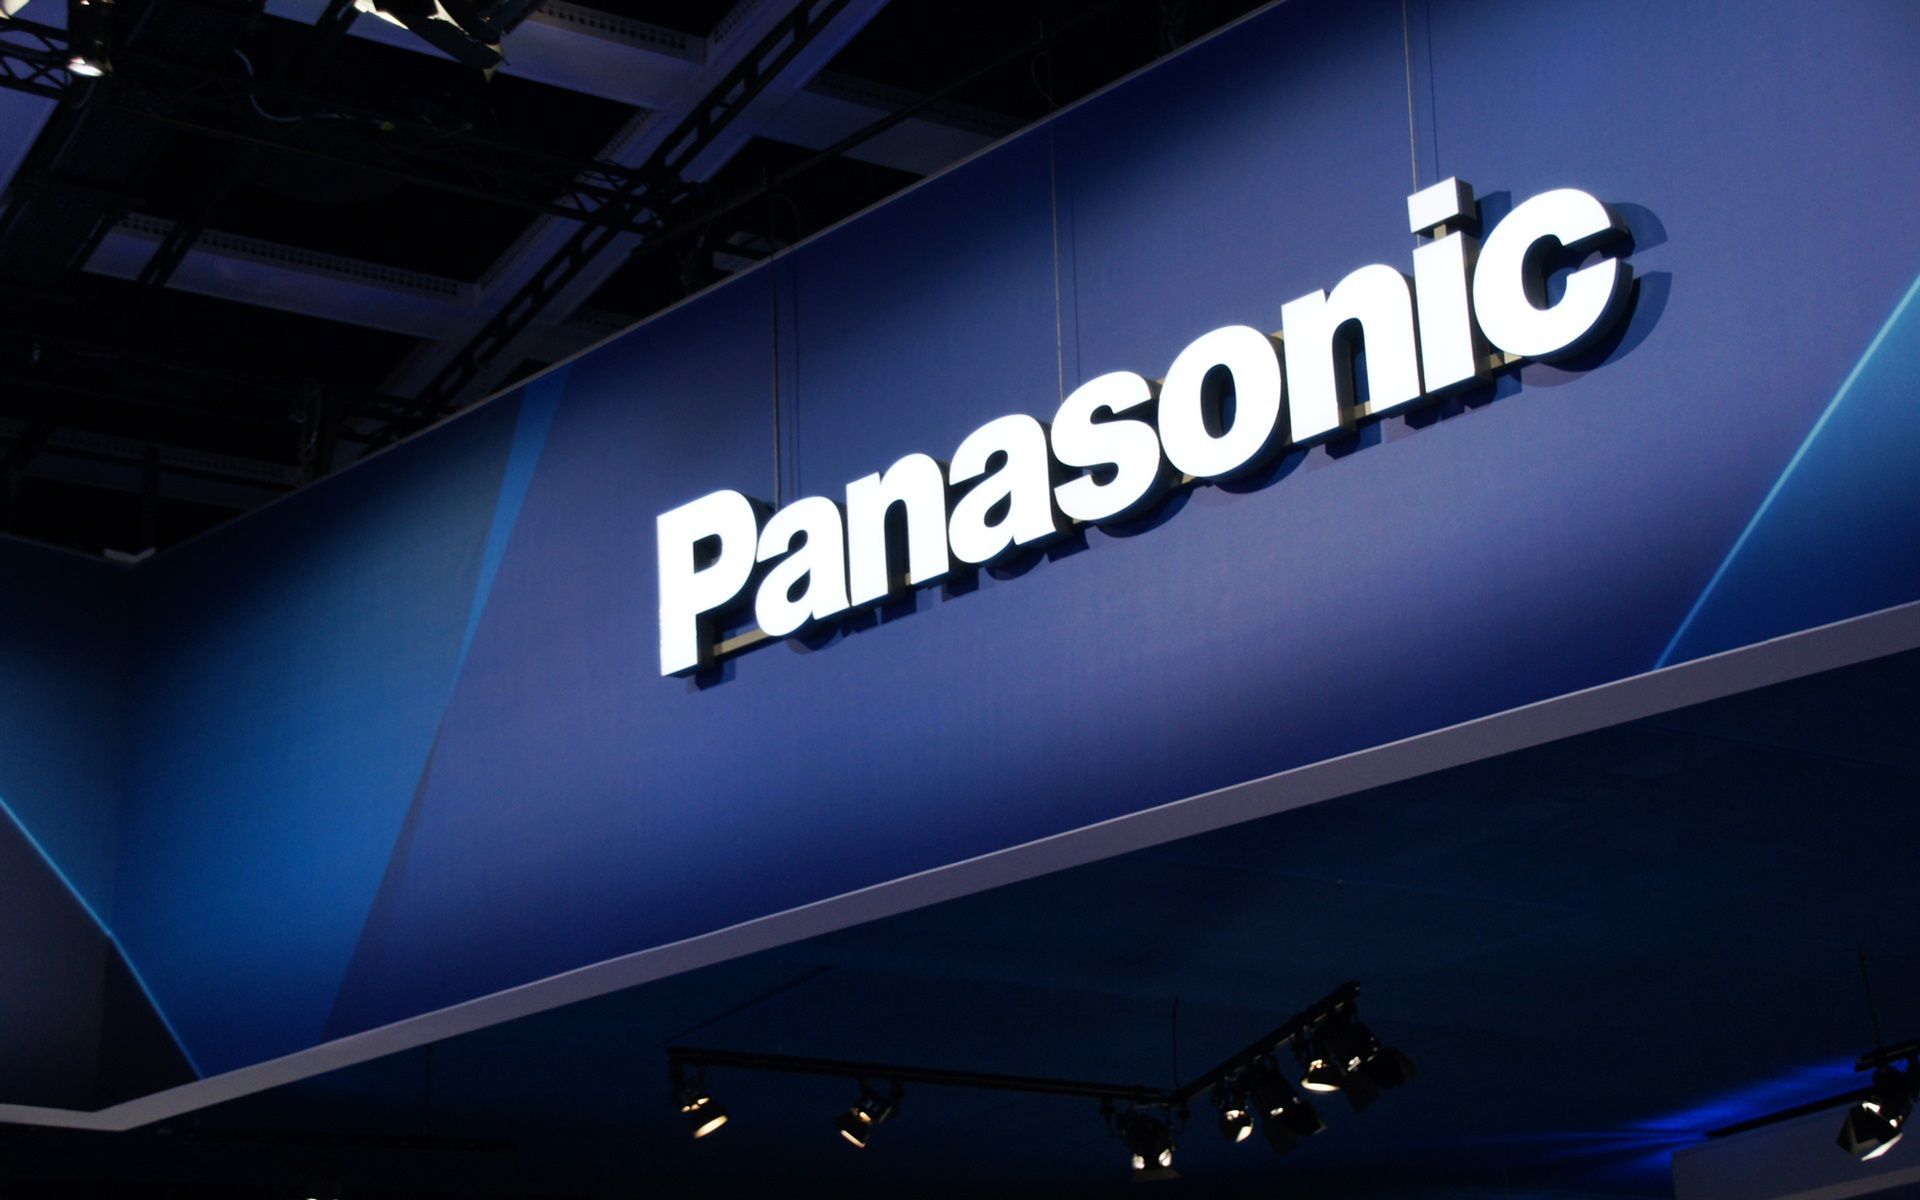 Panasonic Air Conditioners Top Canstar Customer Survey